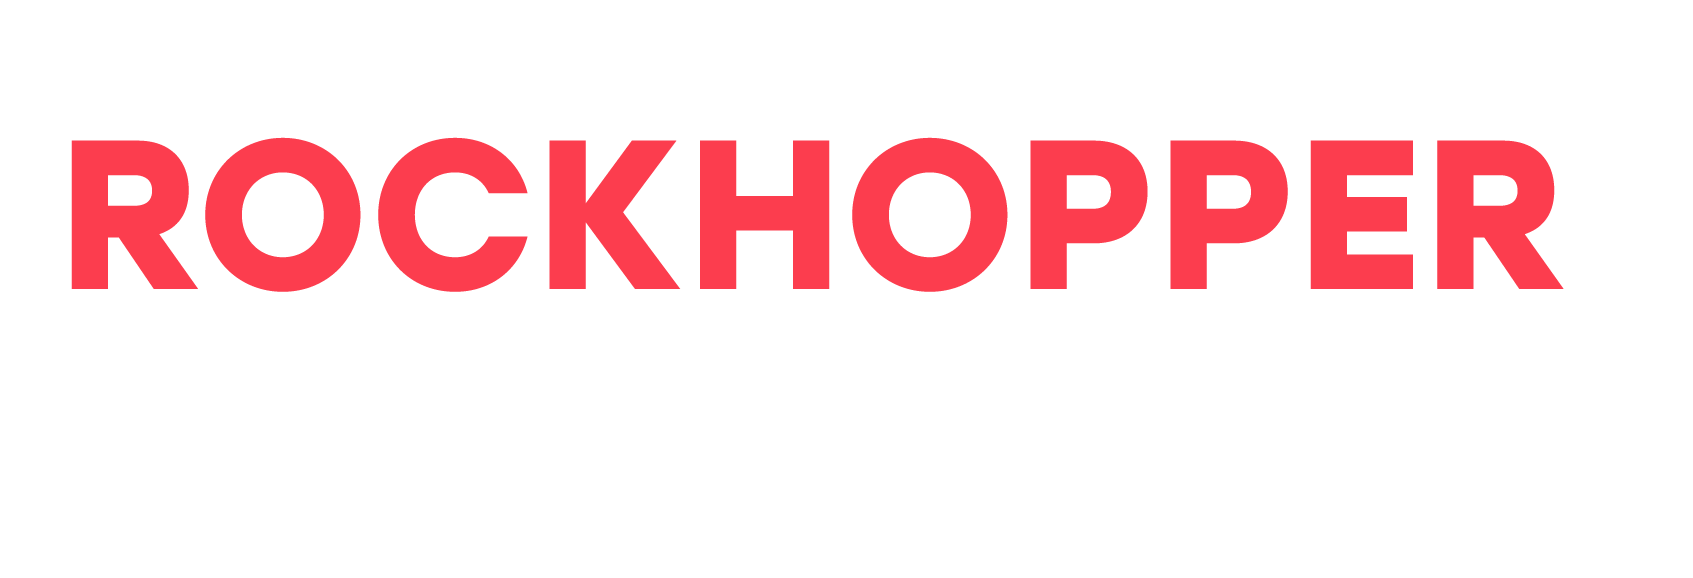 Rockhopper Studios